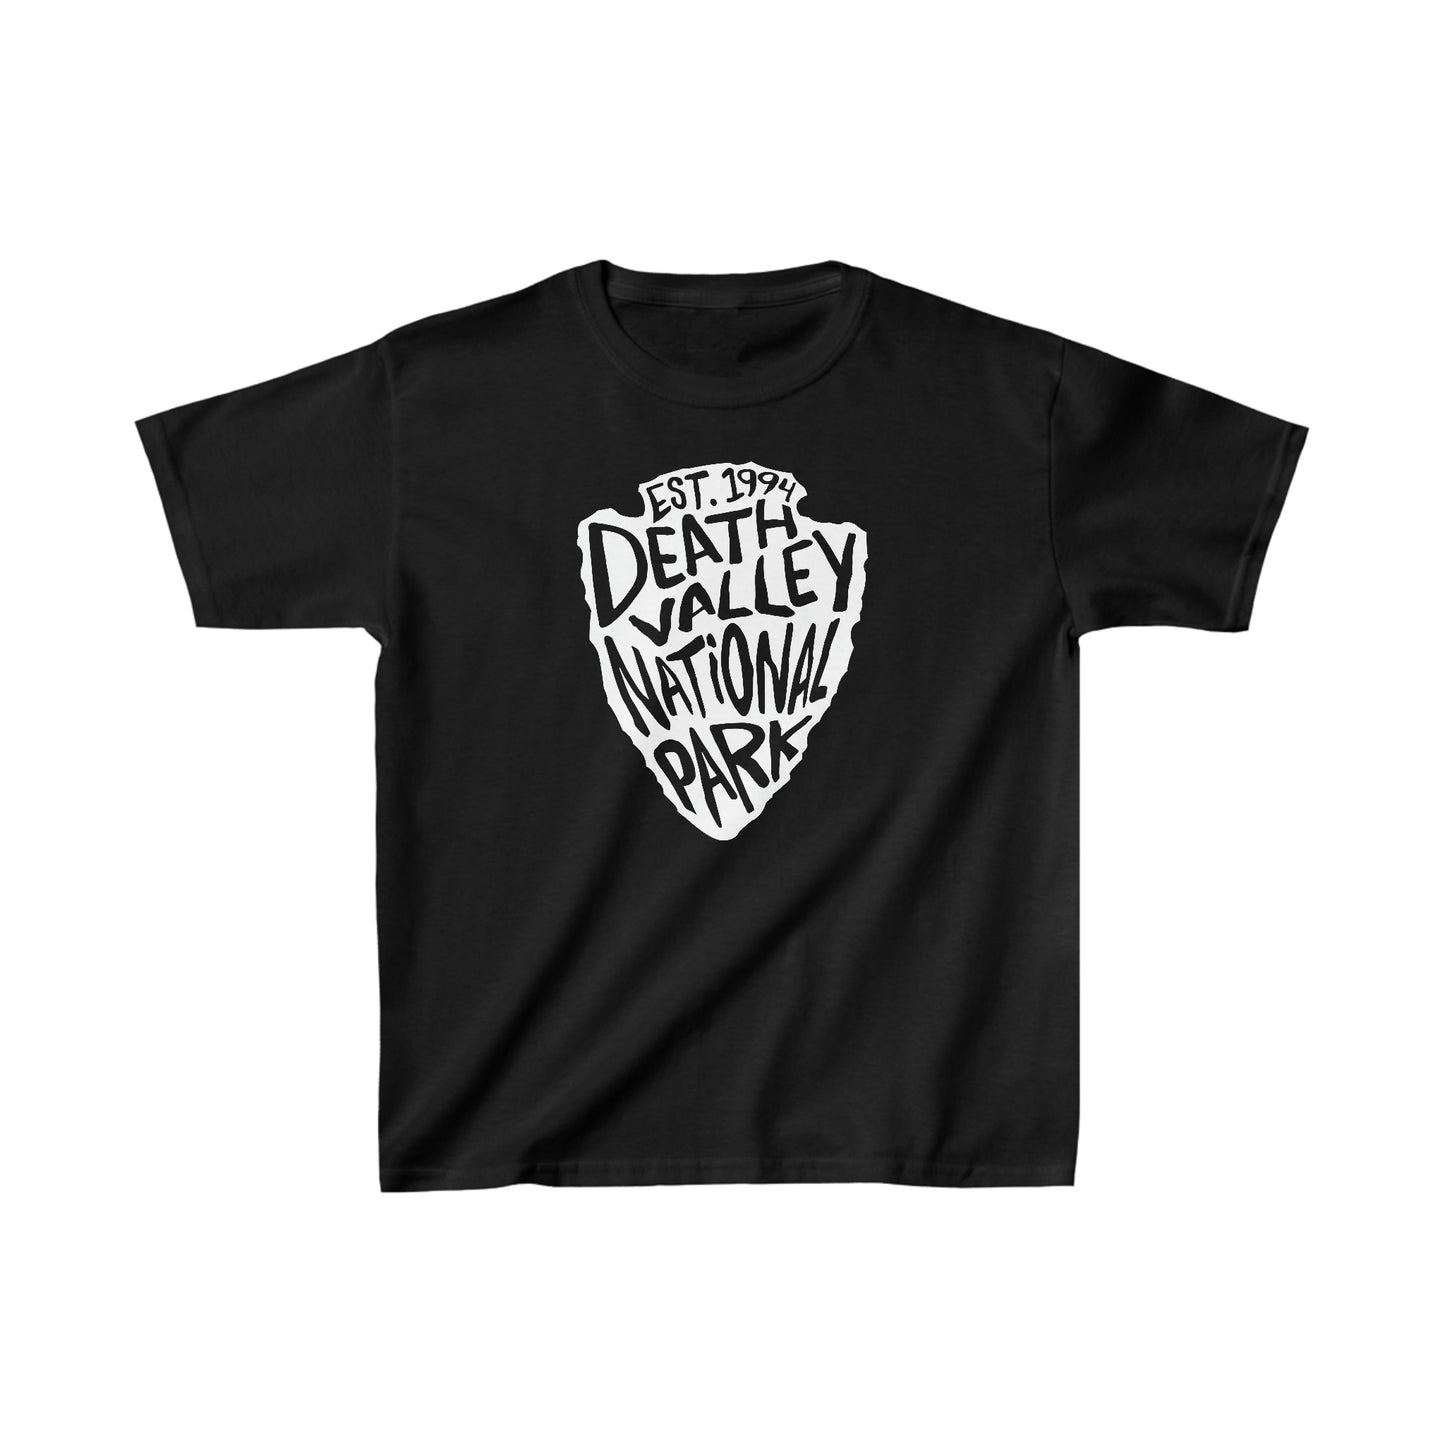 Death Valley National Park Child T-Shirt - Arrowhead Design